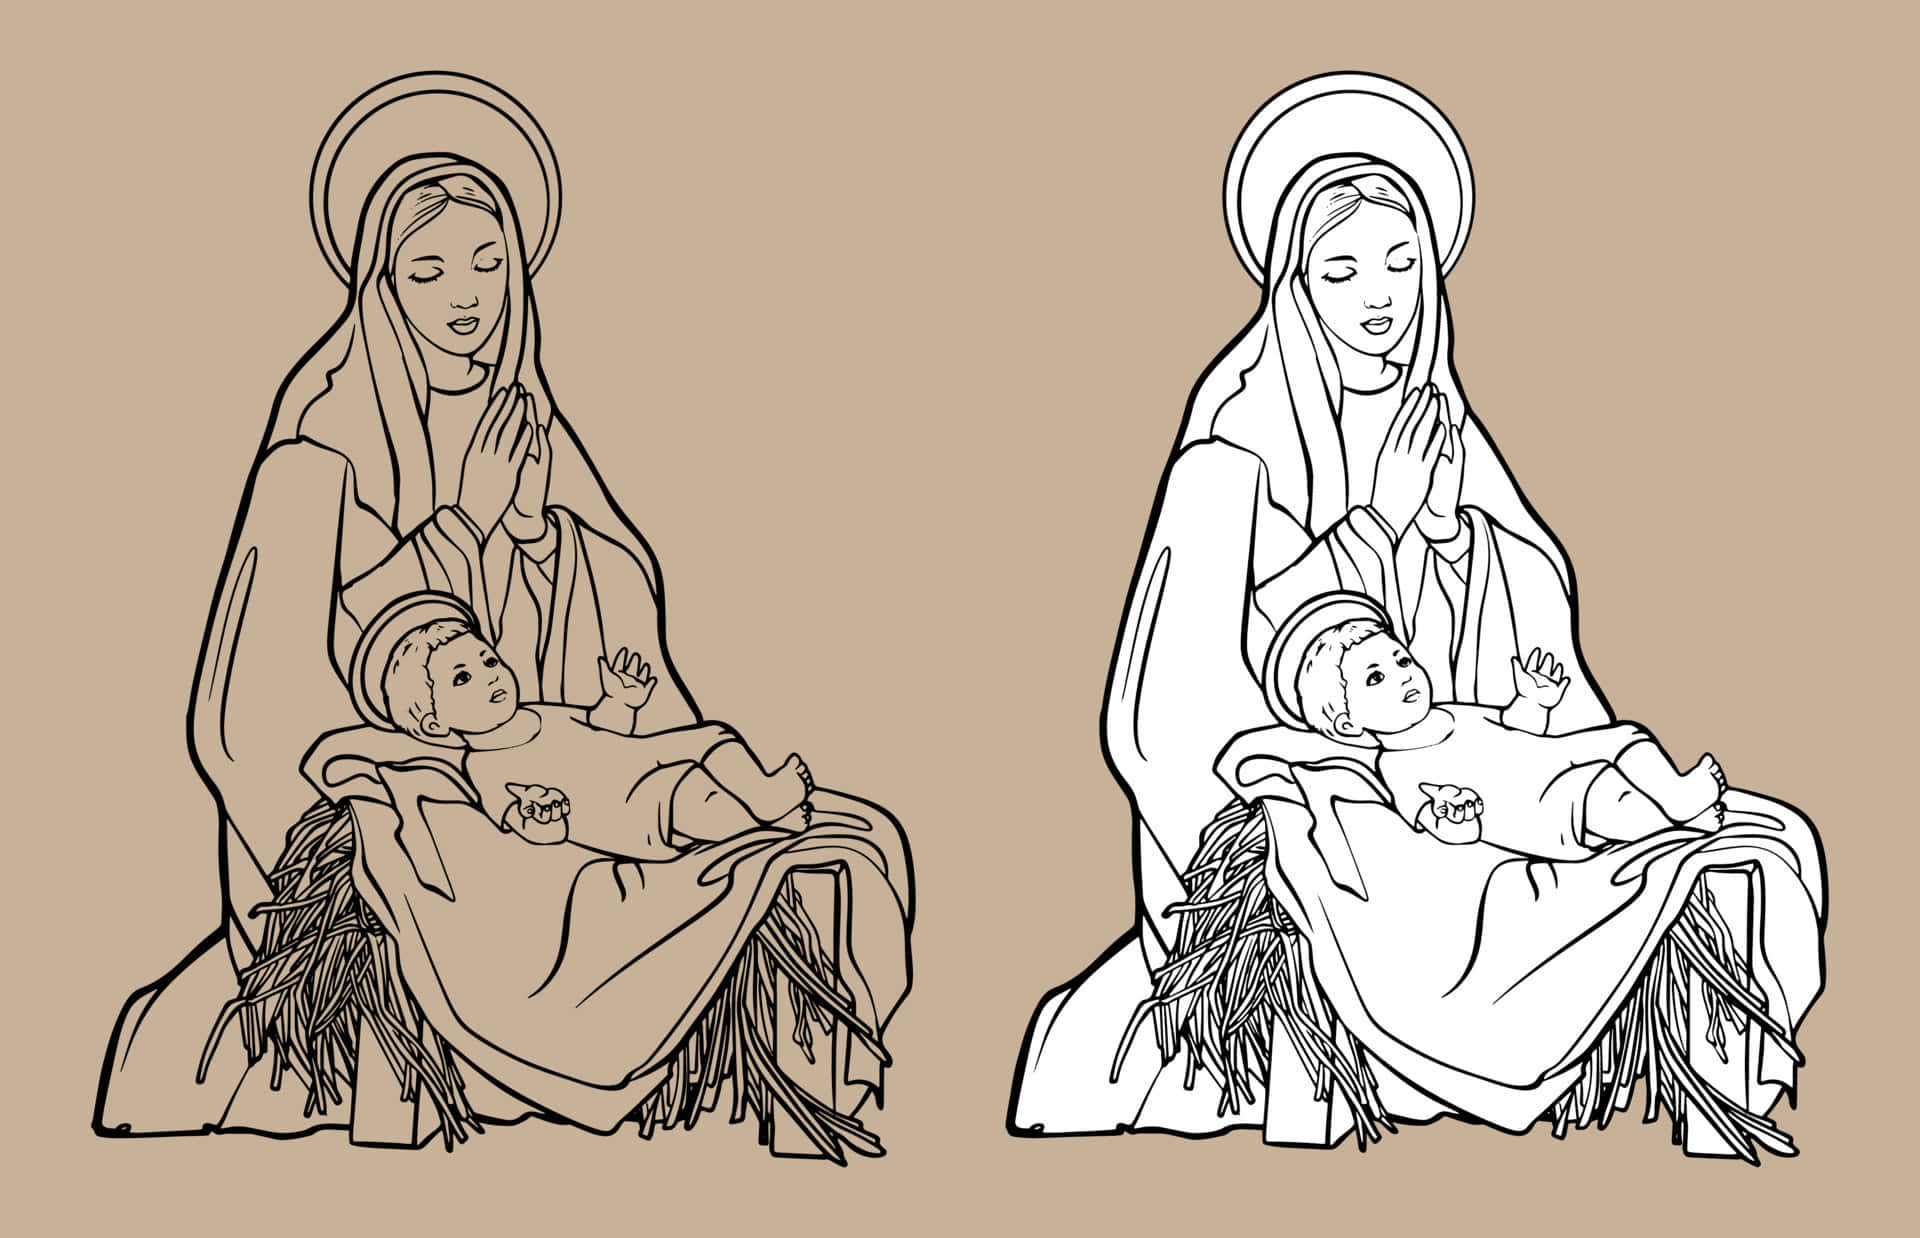 Traditional Nativity Scene